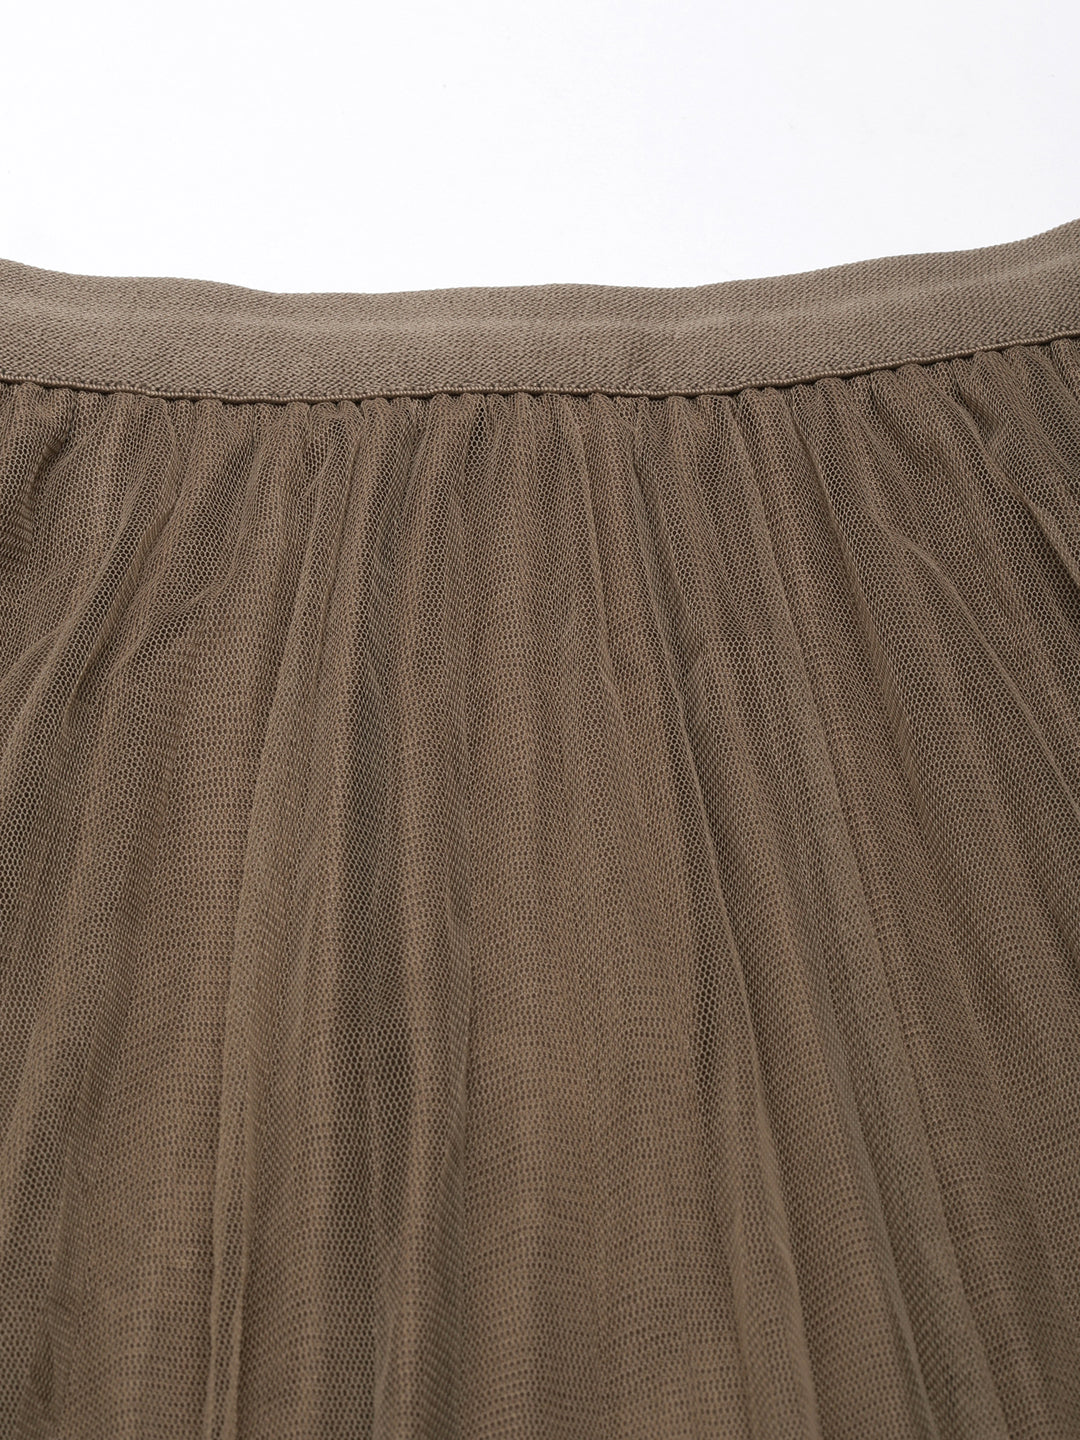 Women Solid Flared Brown Midi Skirt